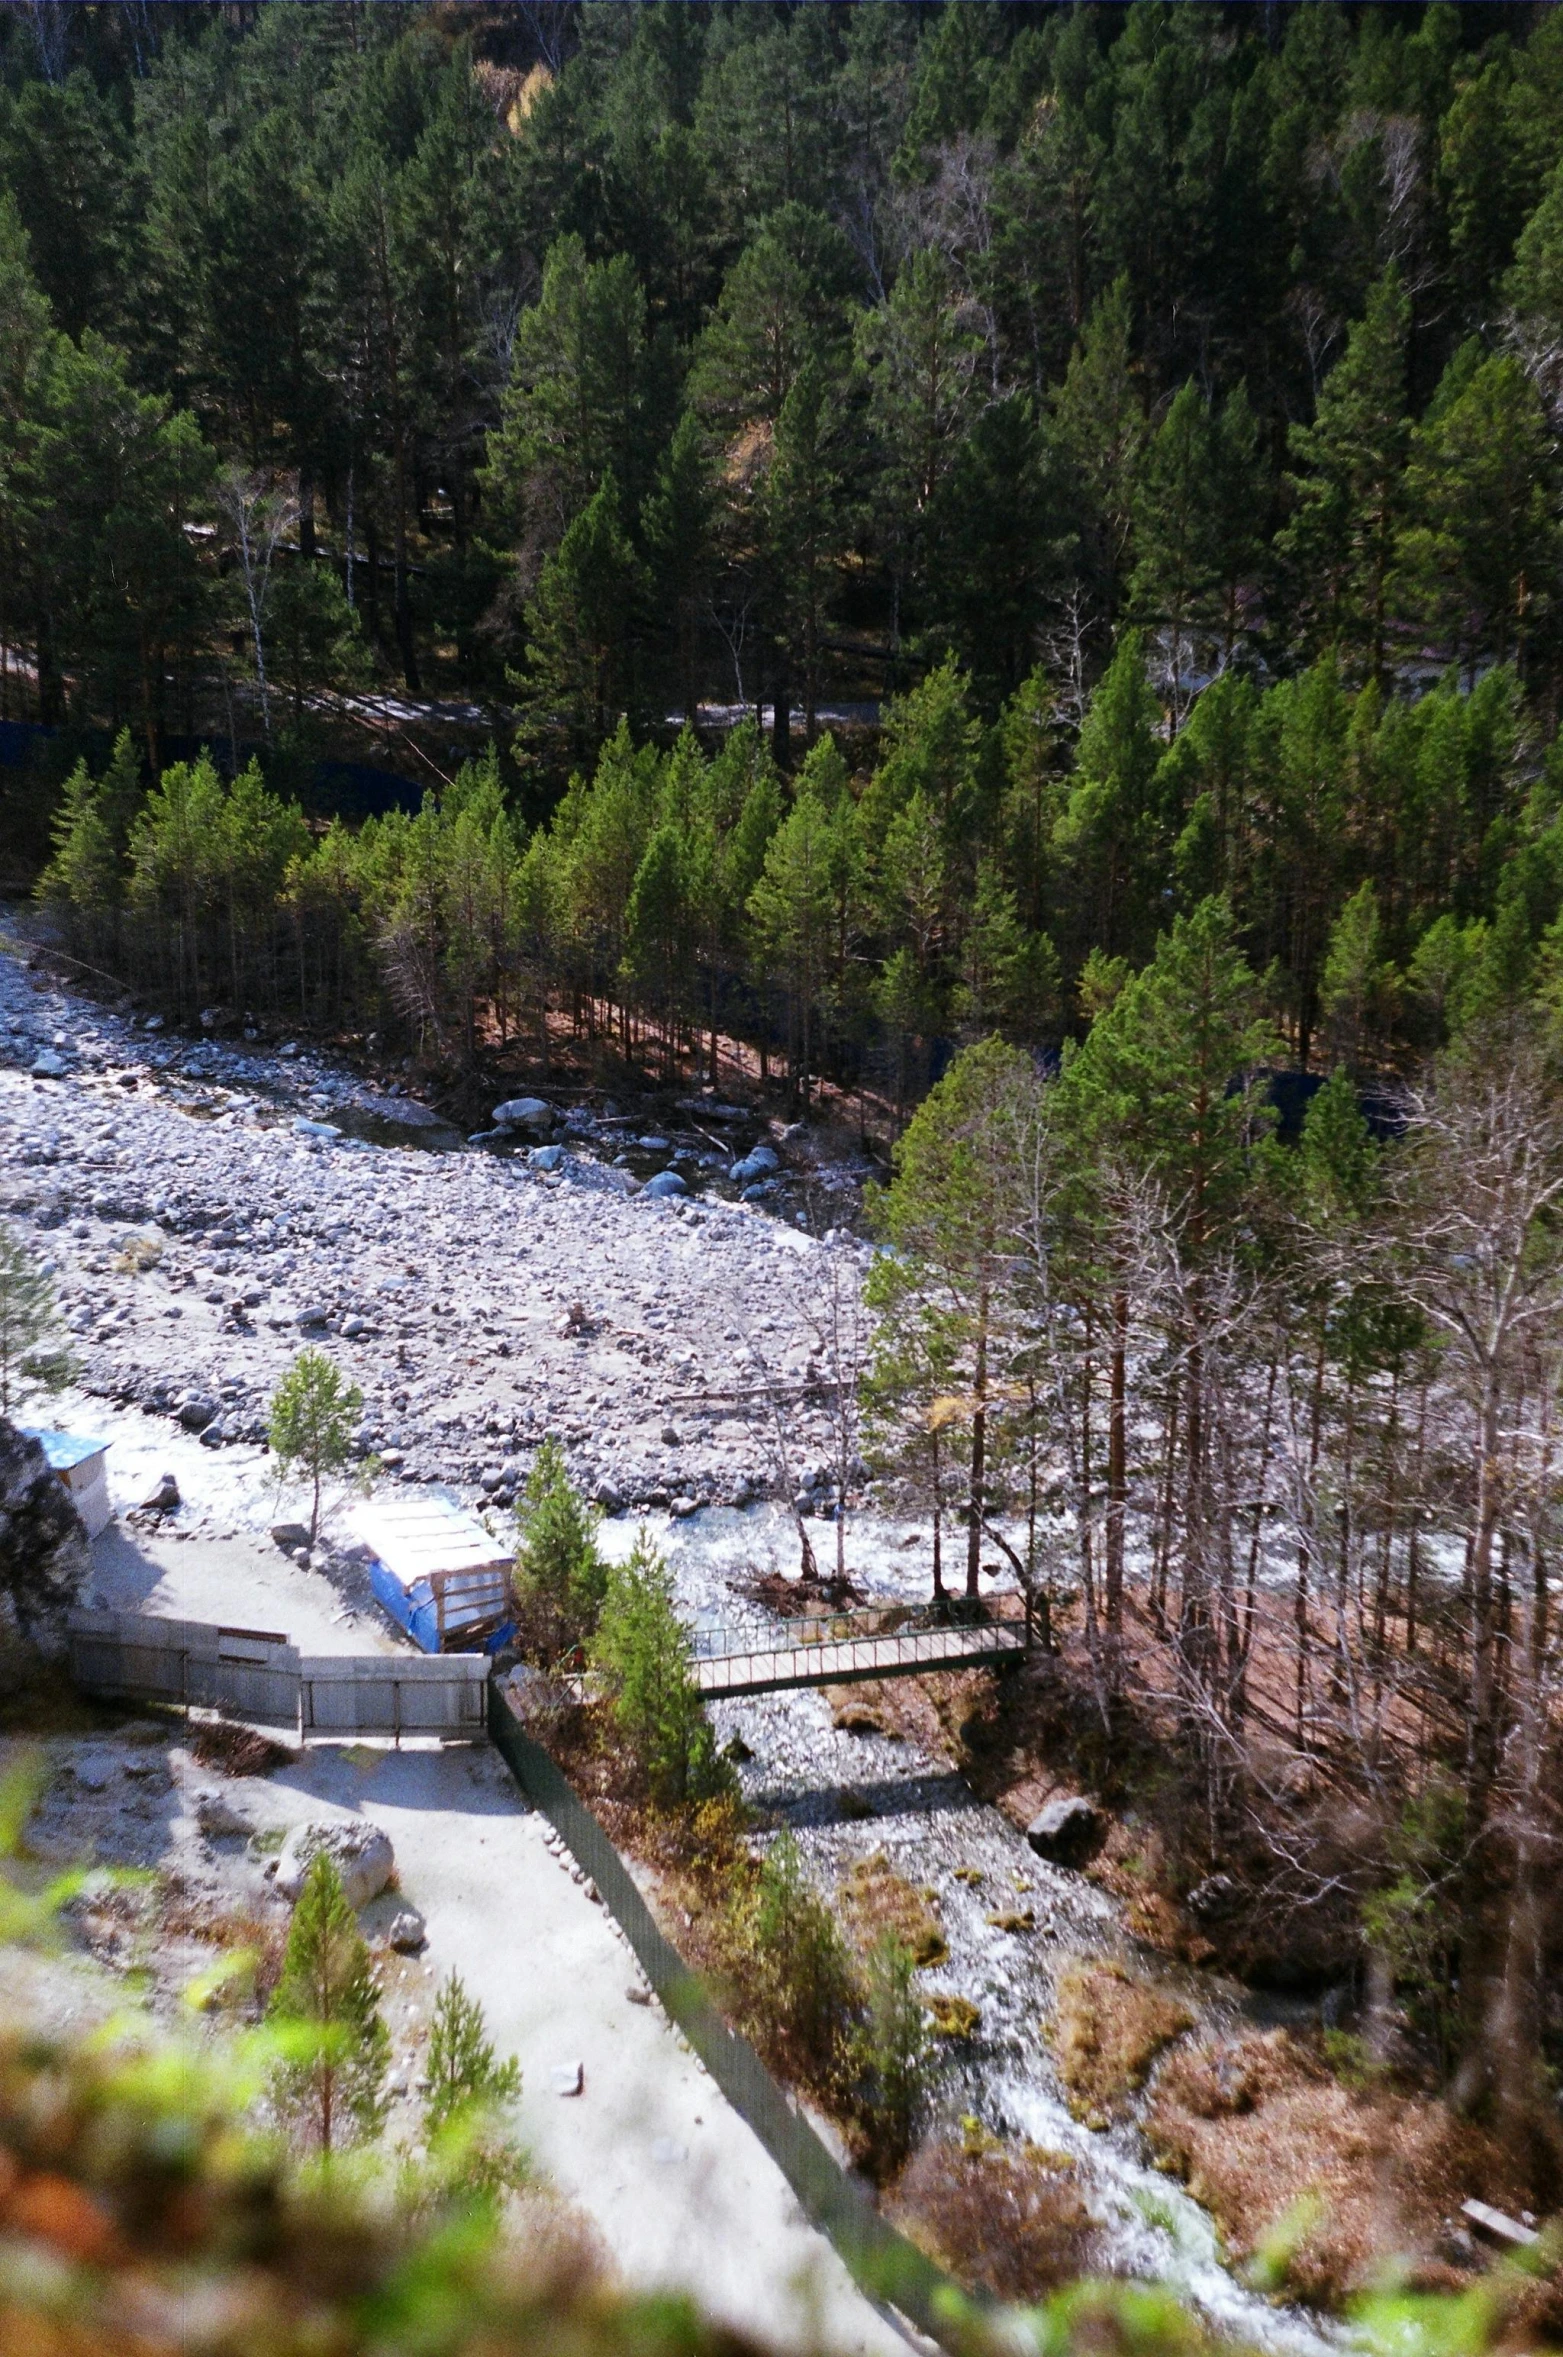 the mountain stream runs through this remote area